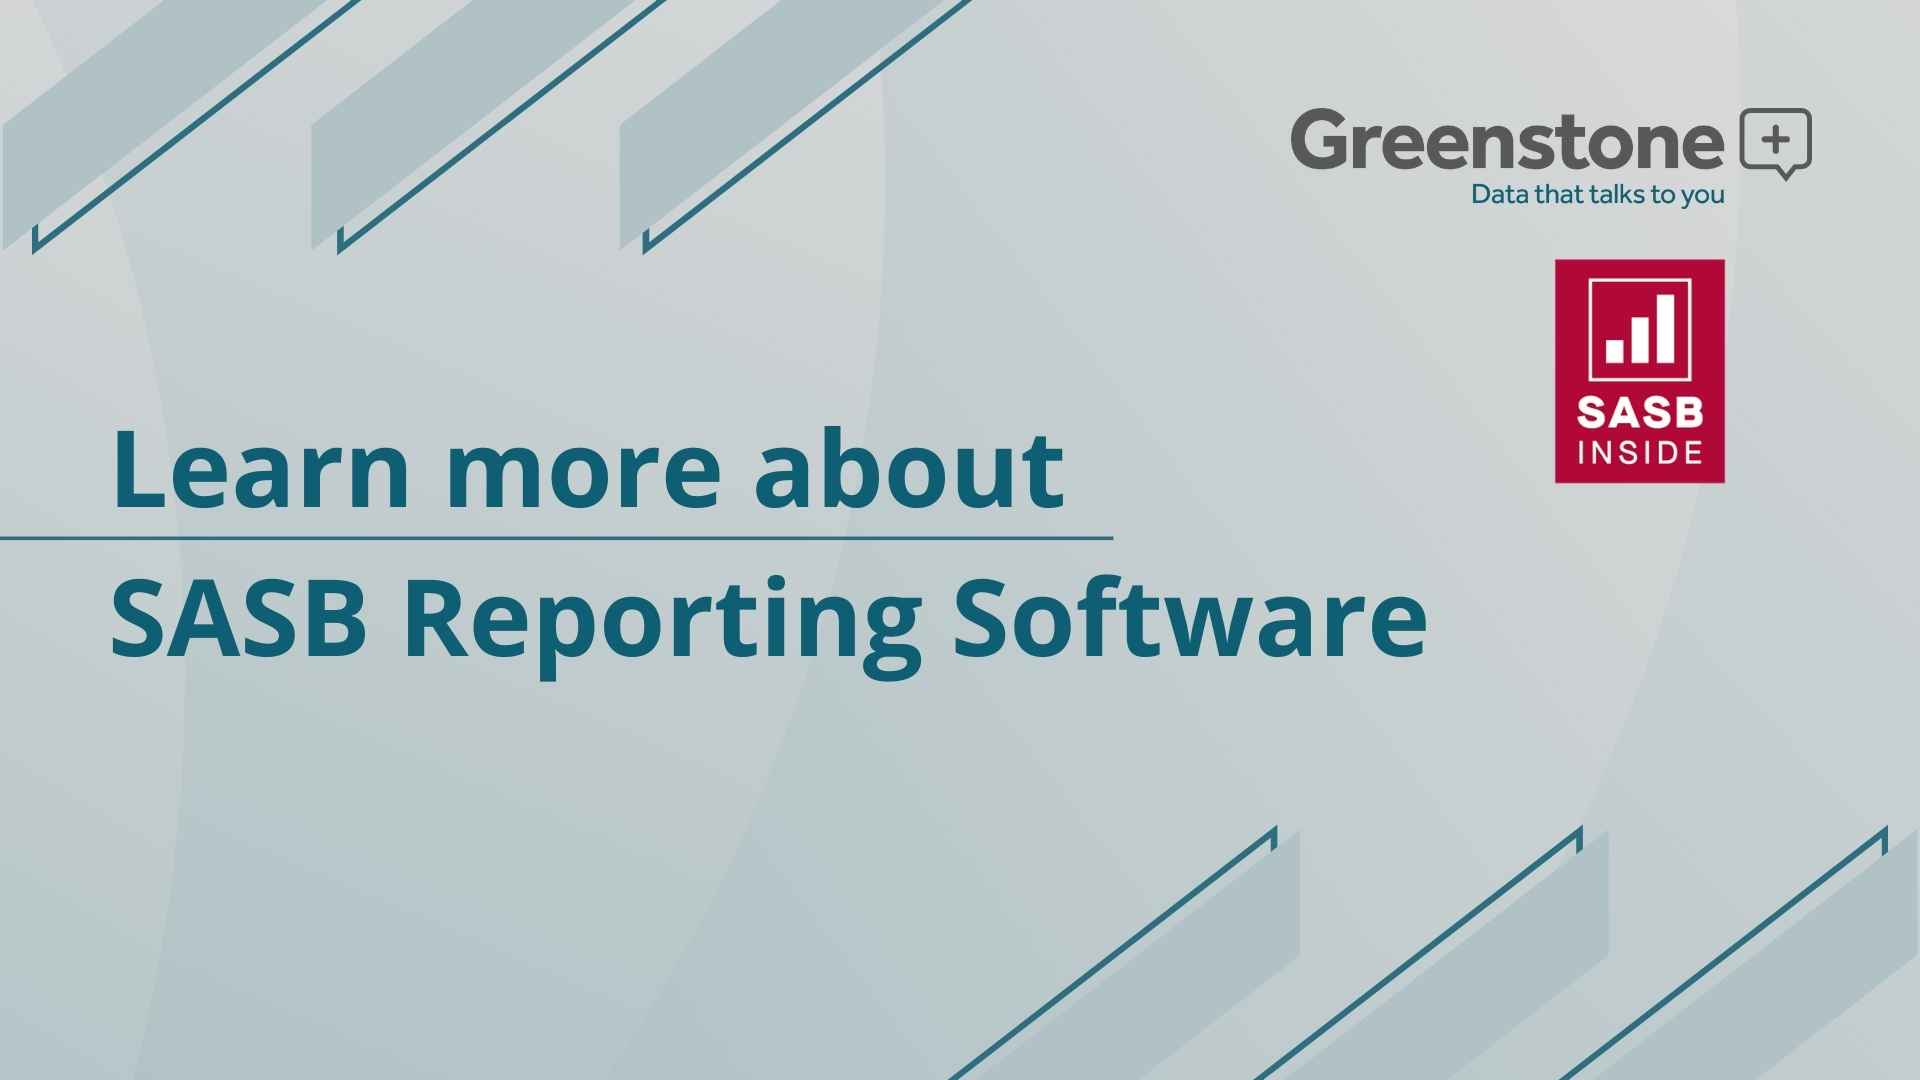 Greenstone & SASB reporting software